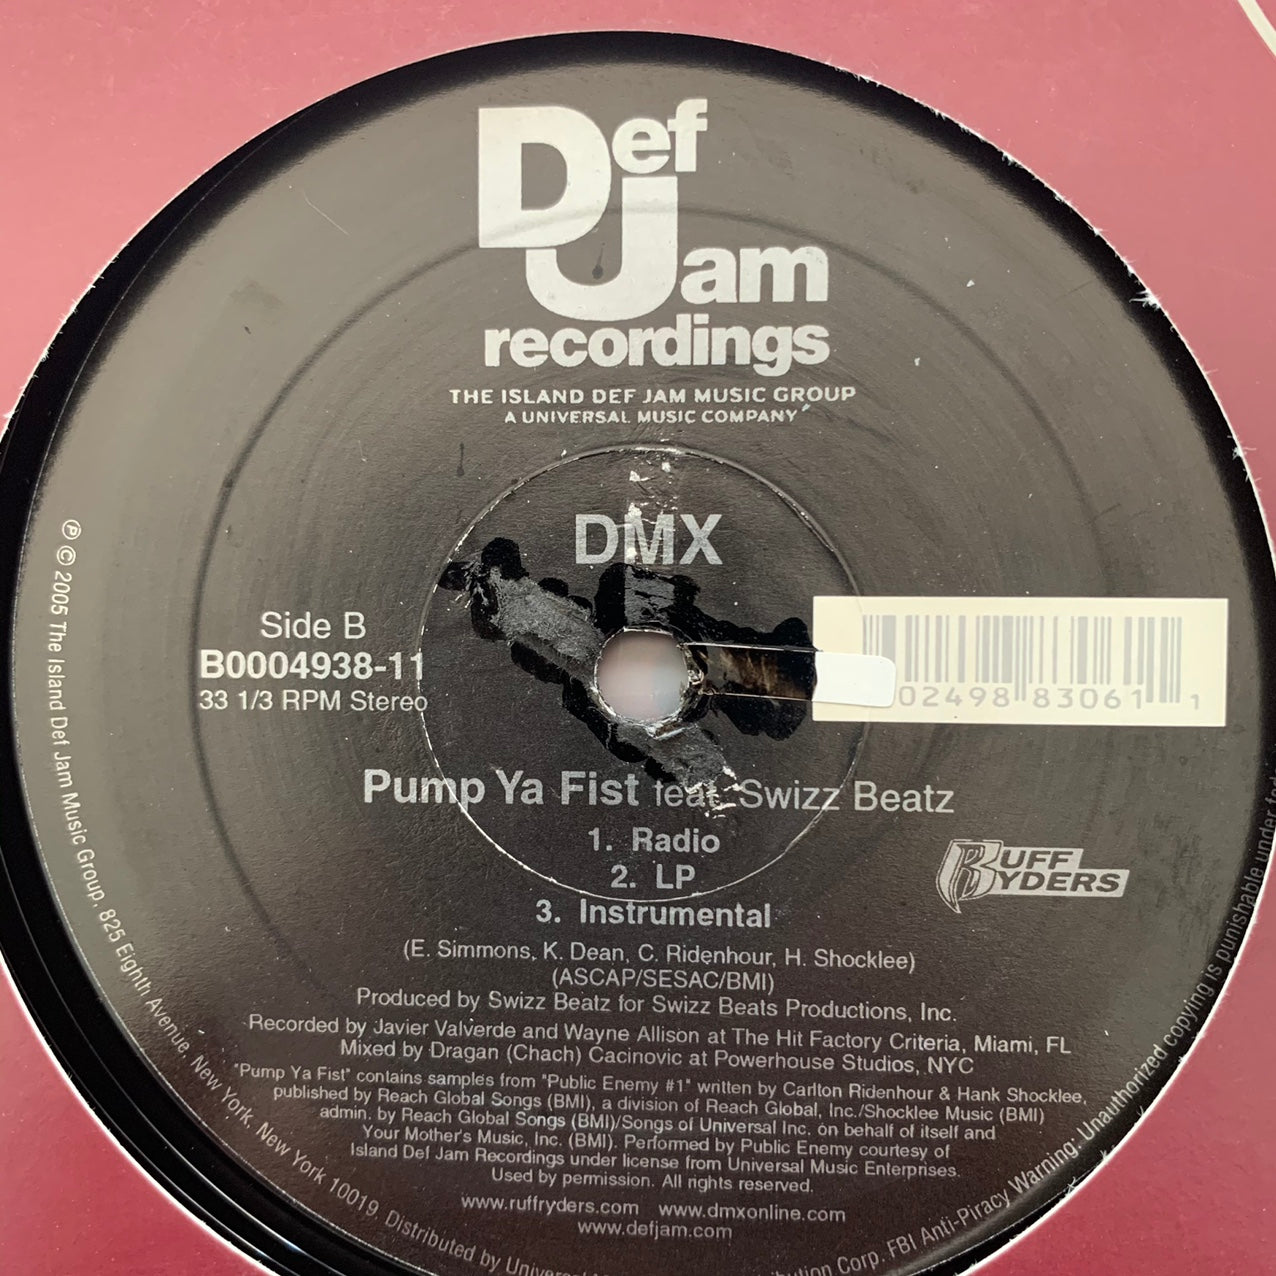 DMX “Give Em What They Want” / “Pump Ya Fist” 6 Version 12inch Vinyl